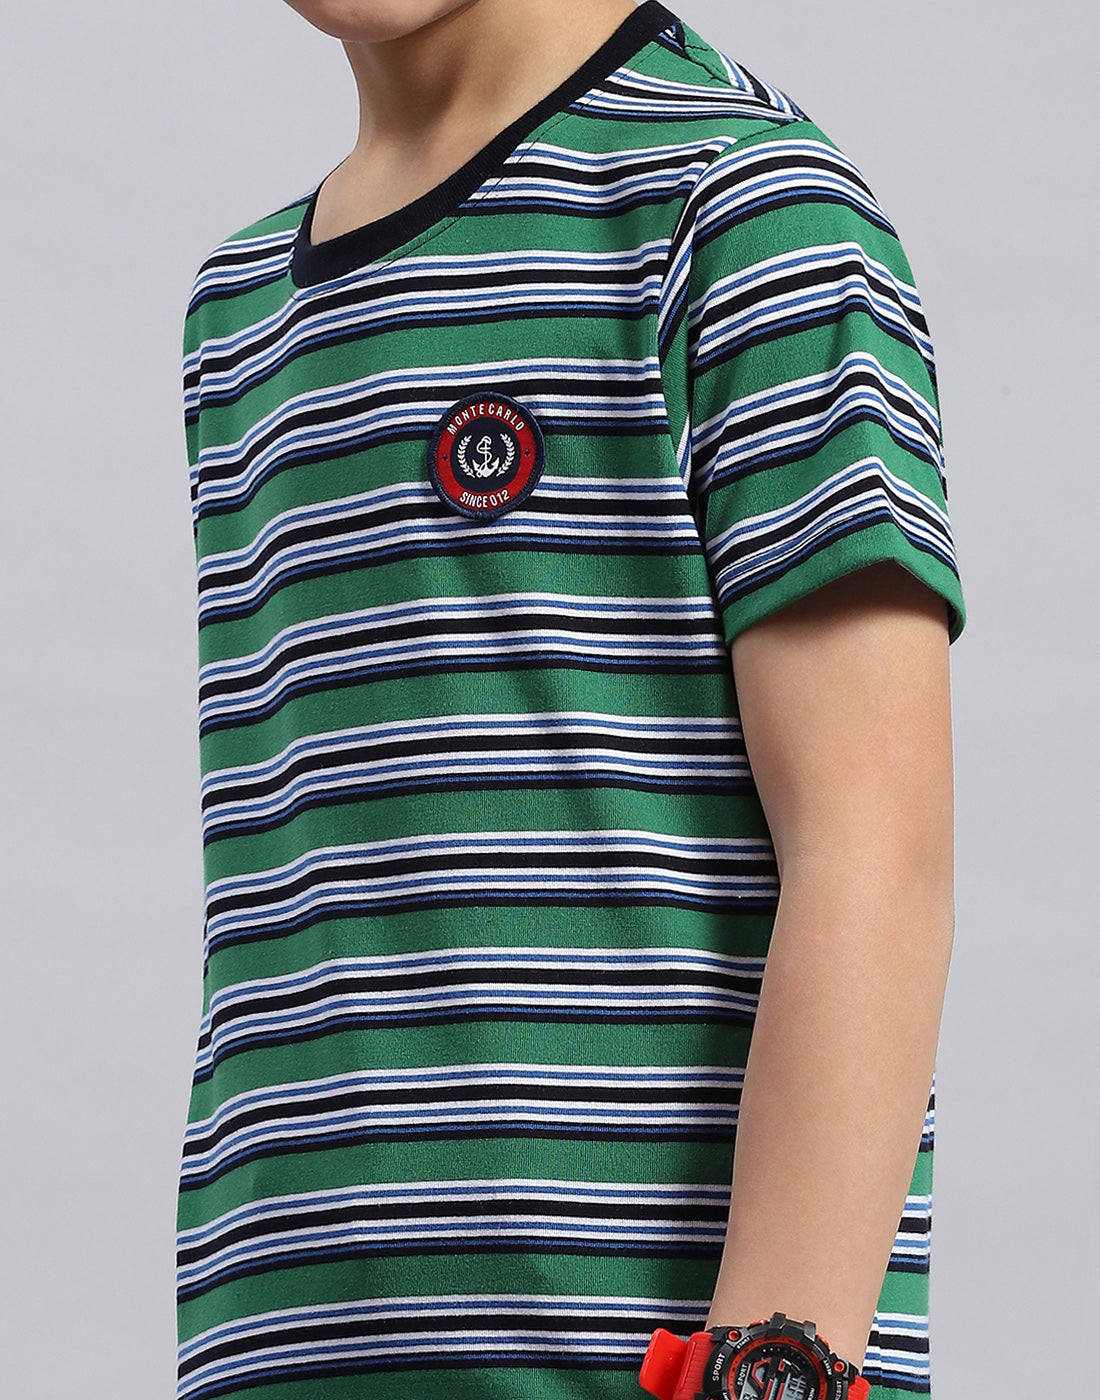 Boys Multi Color Printed Round Neck Half Sleeve T-Shirt